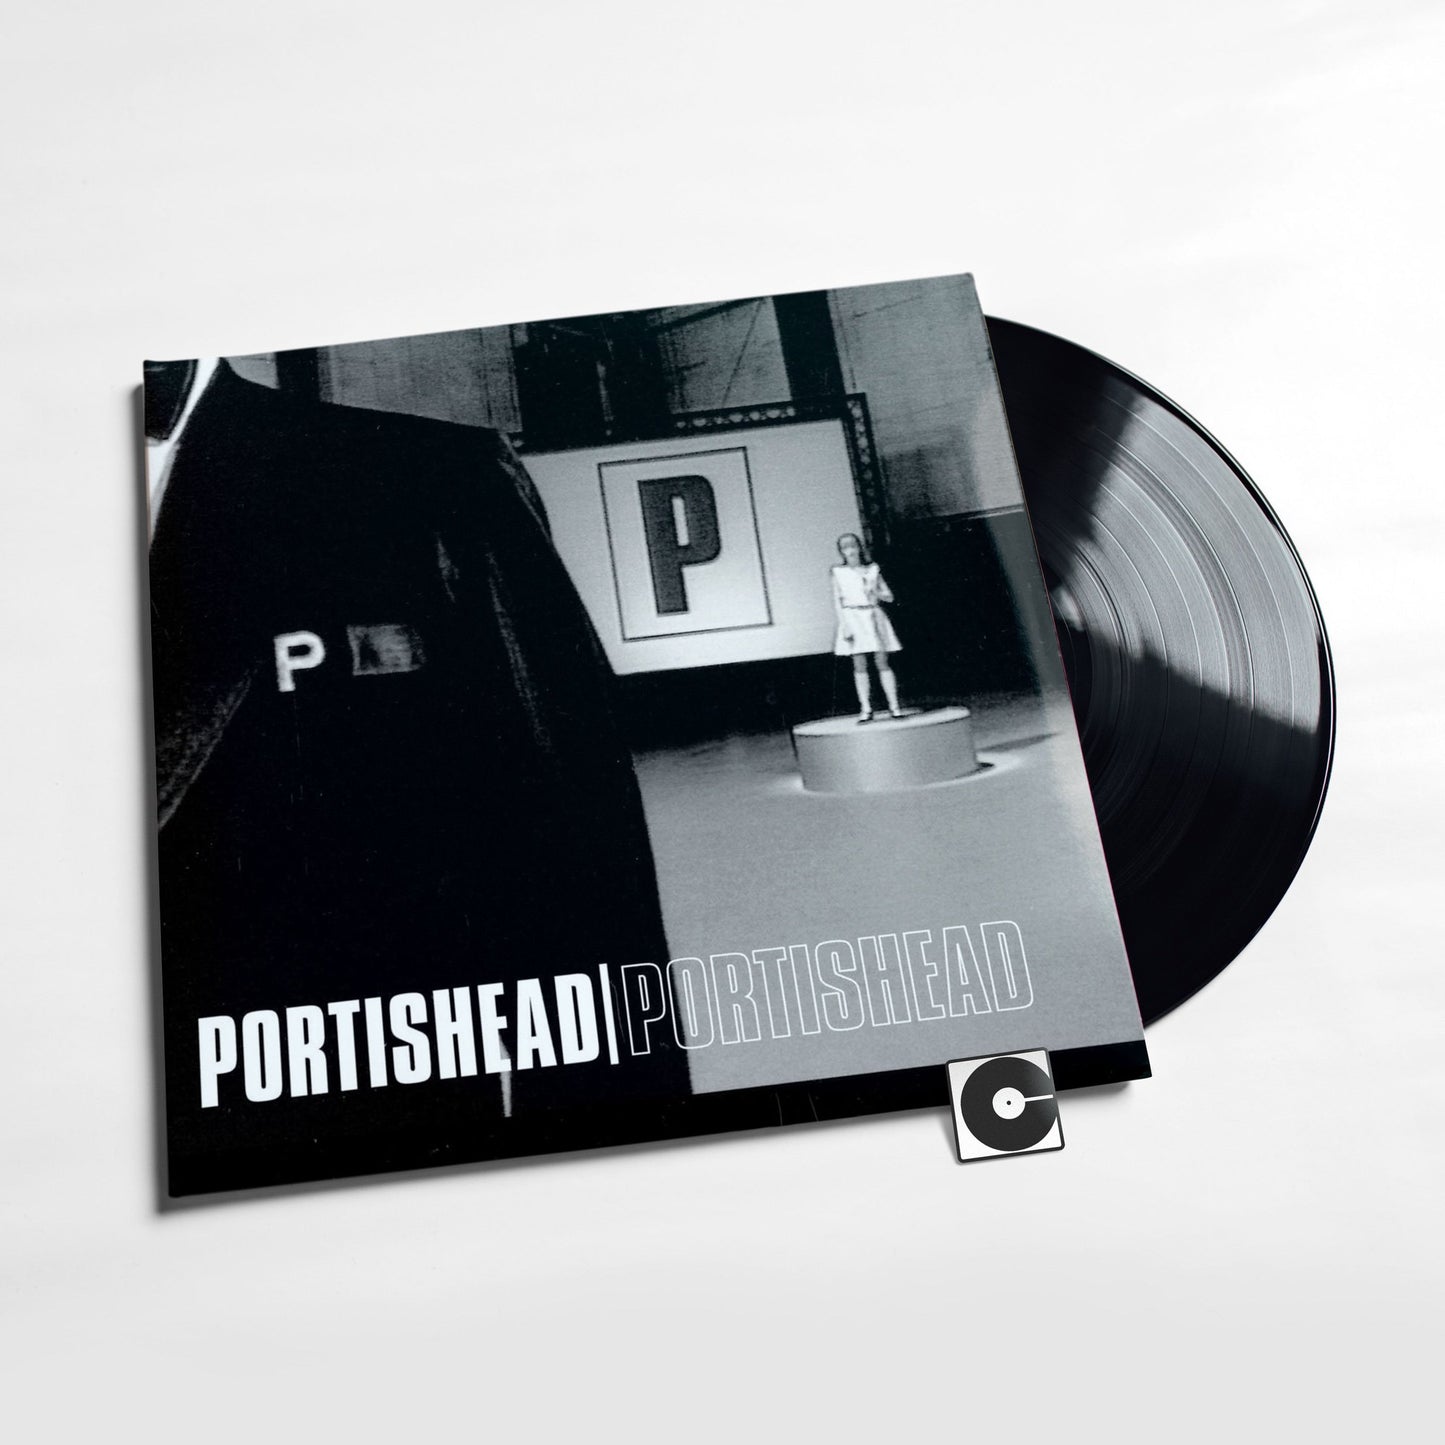 Portishead - "Portishead"